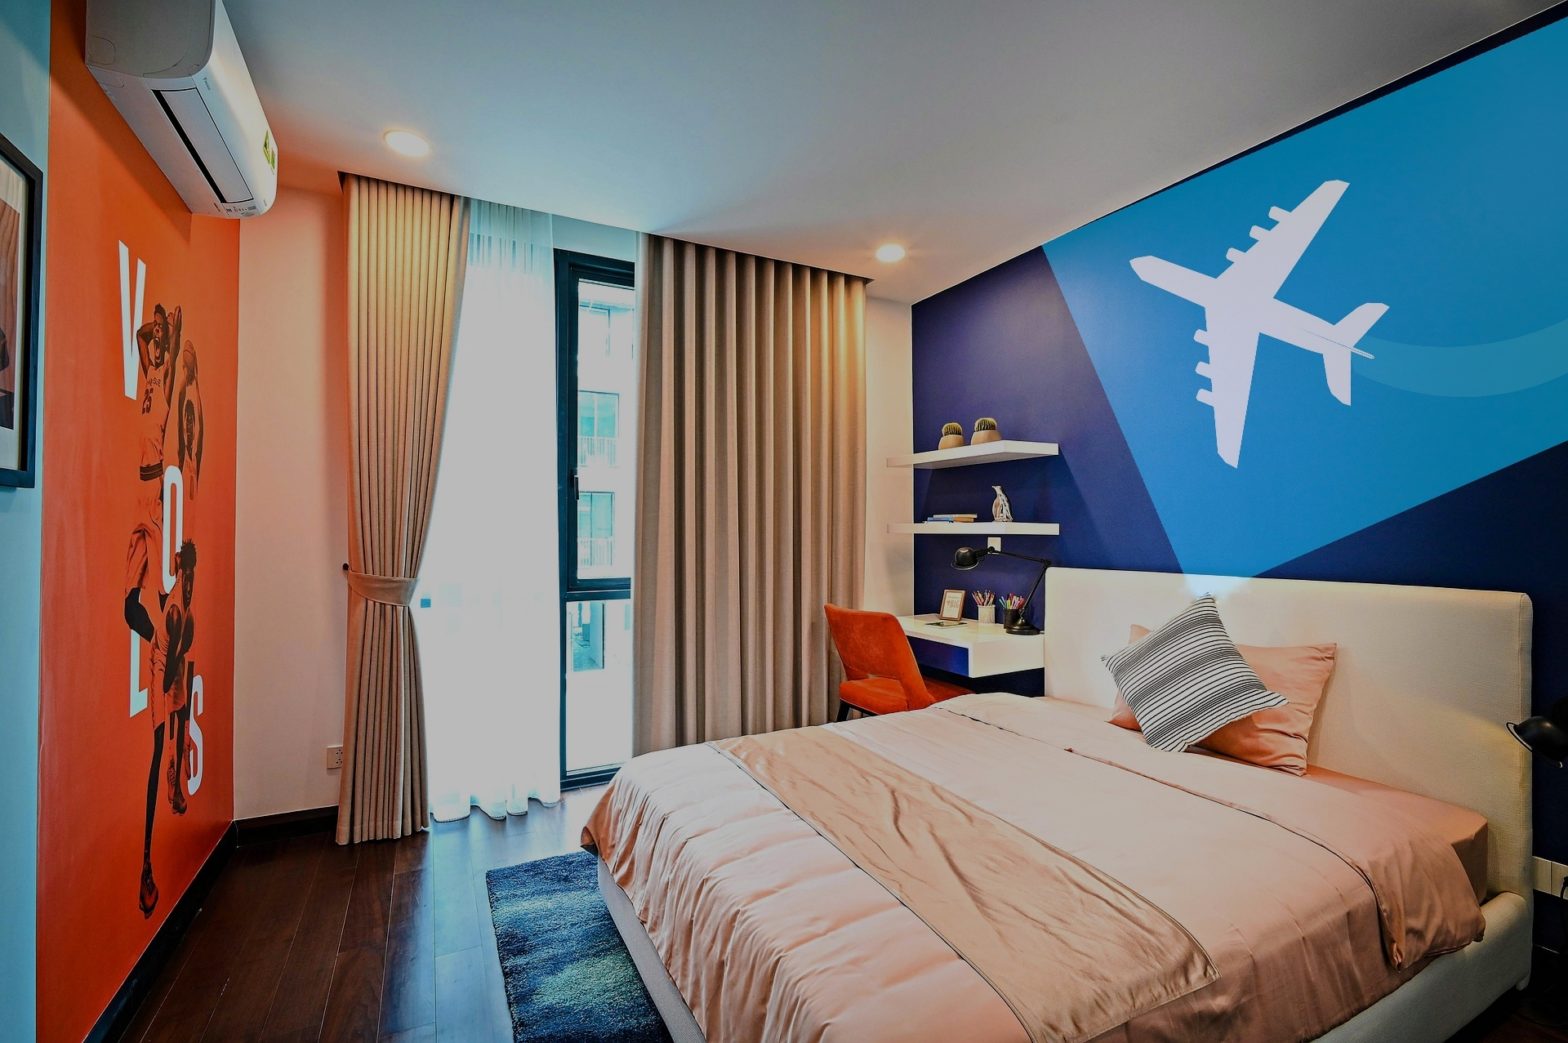 7 Kids Bedroom Décor Ideas To Spark Travel Dreams